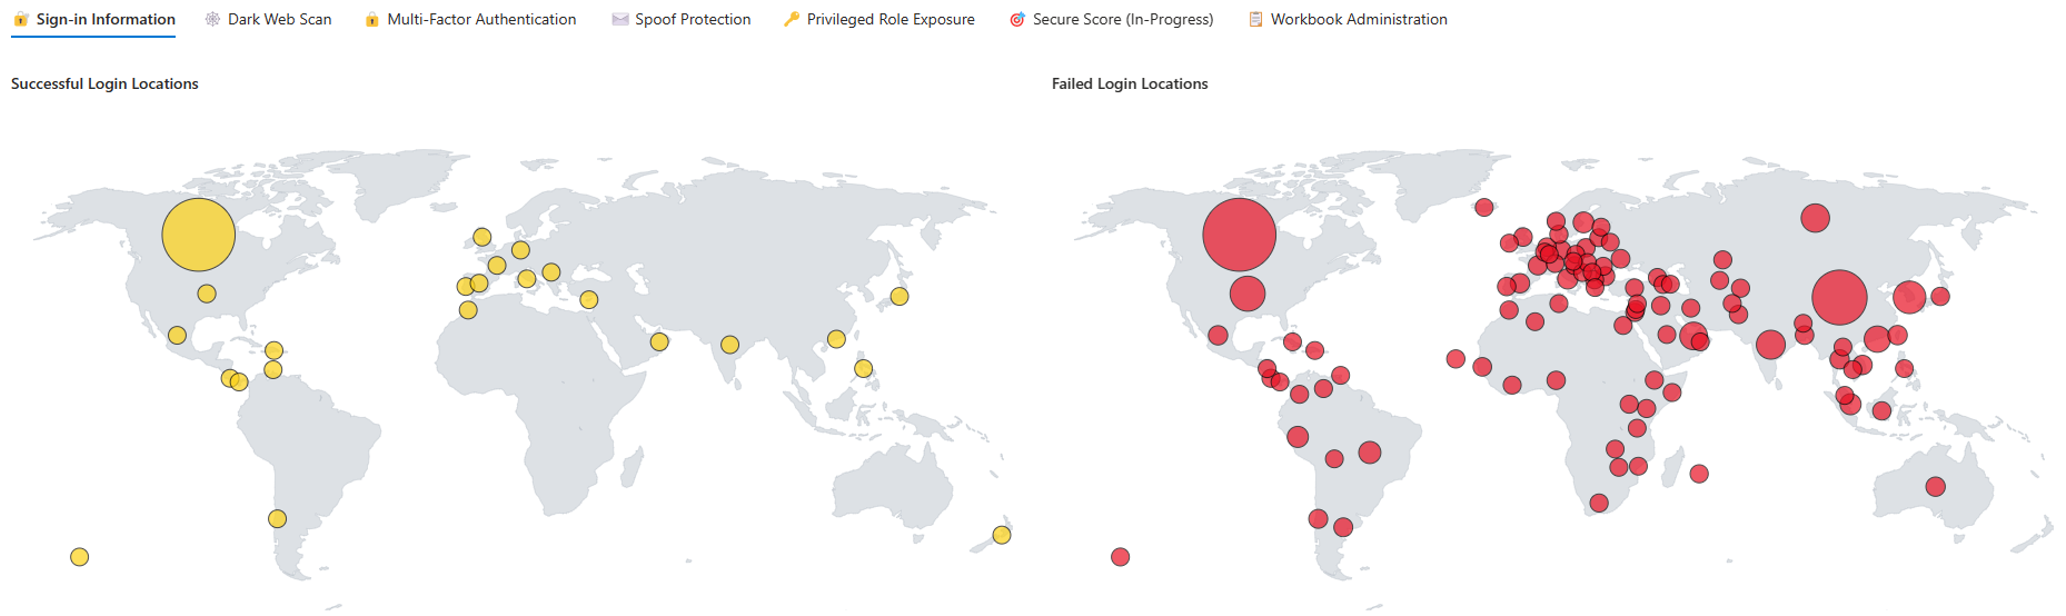 a visual representation of attacks done globally